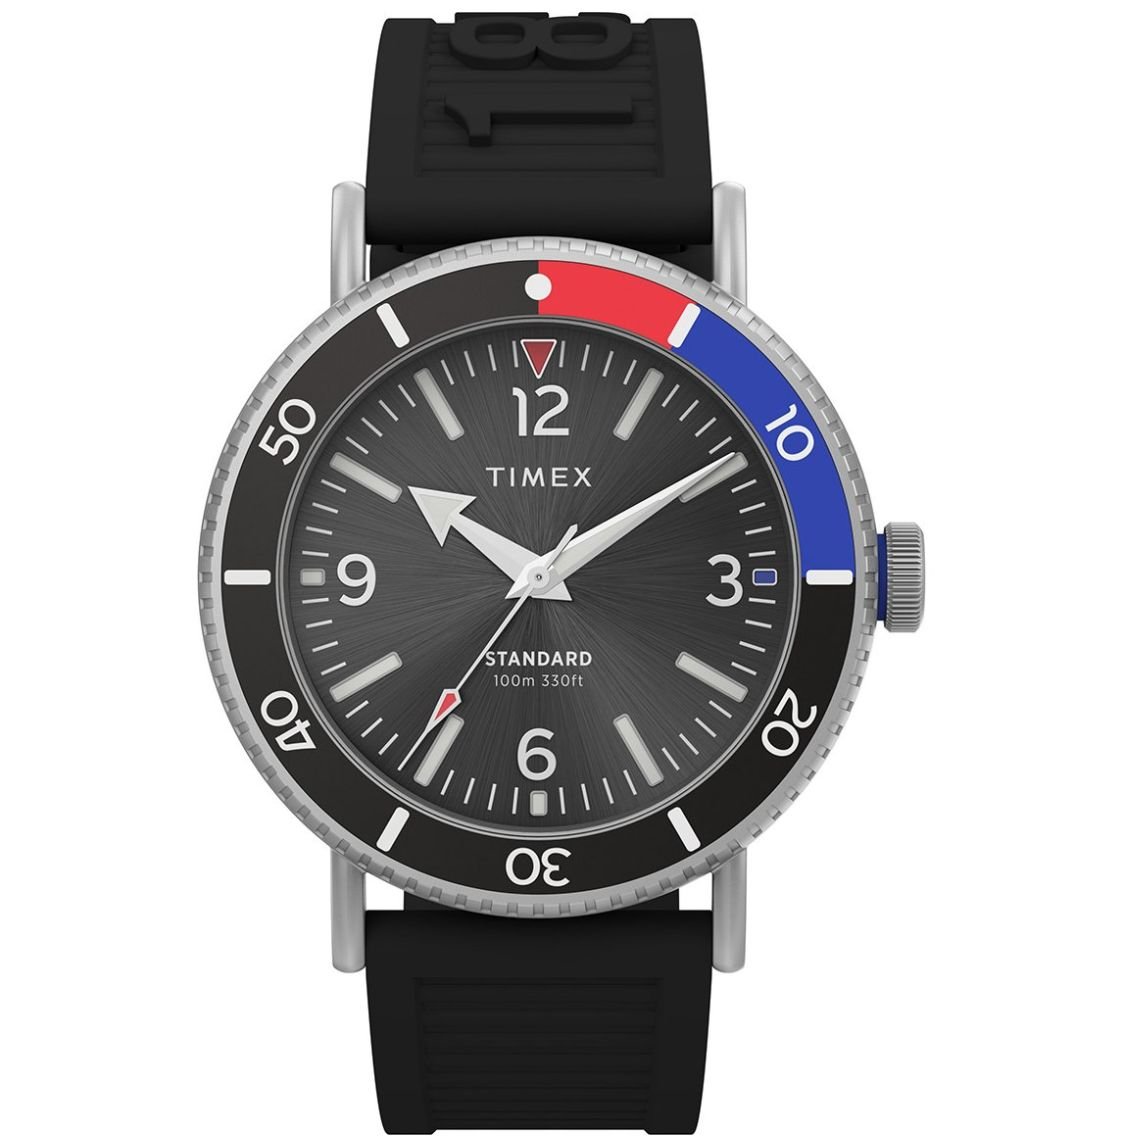 Reloj Timex TW5M06800 para Hombre Reloj de tamaño completo, Estándar.